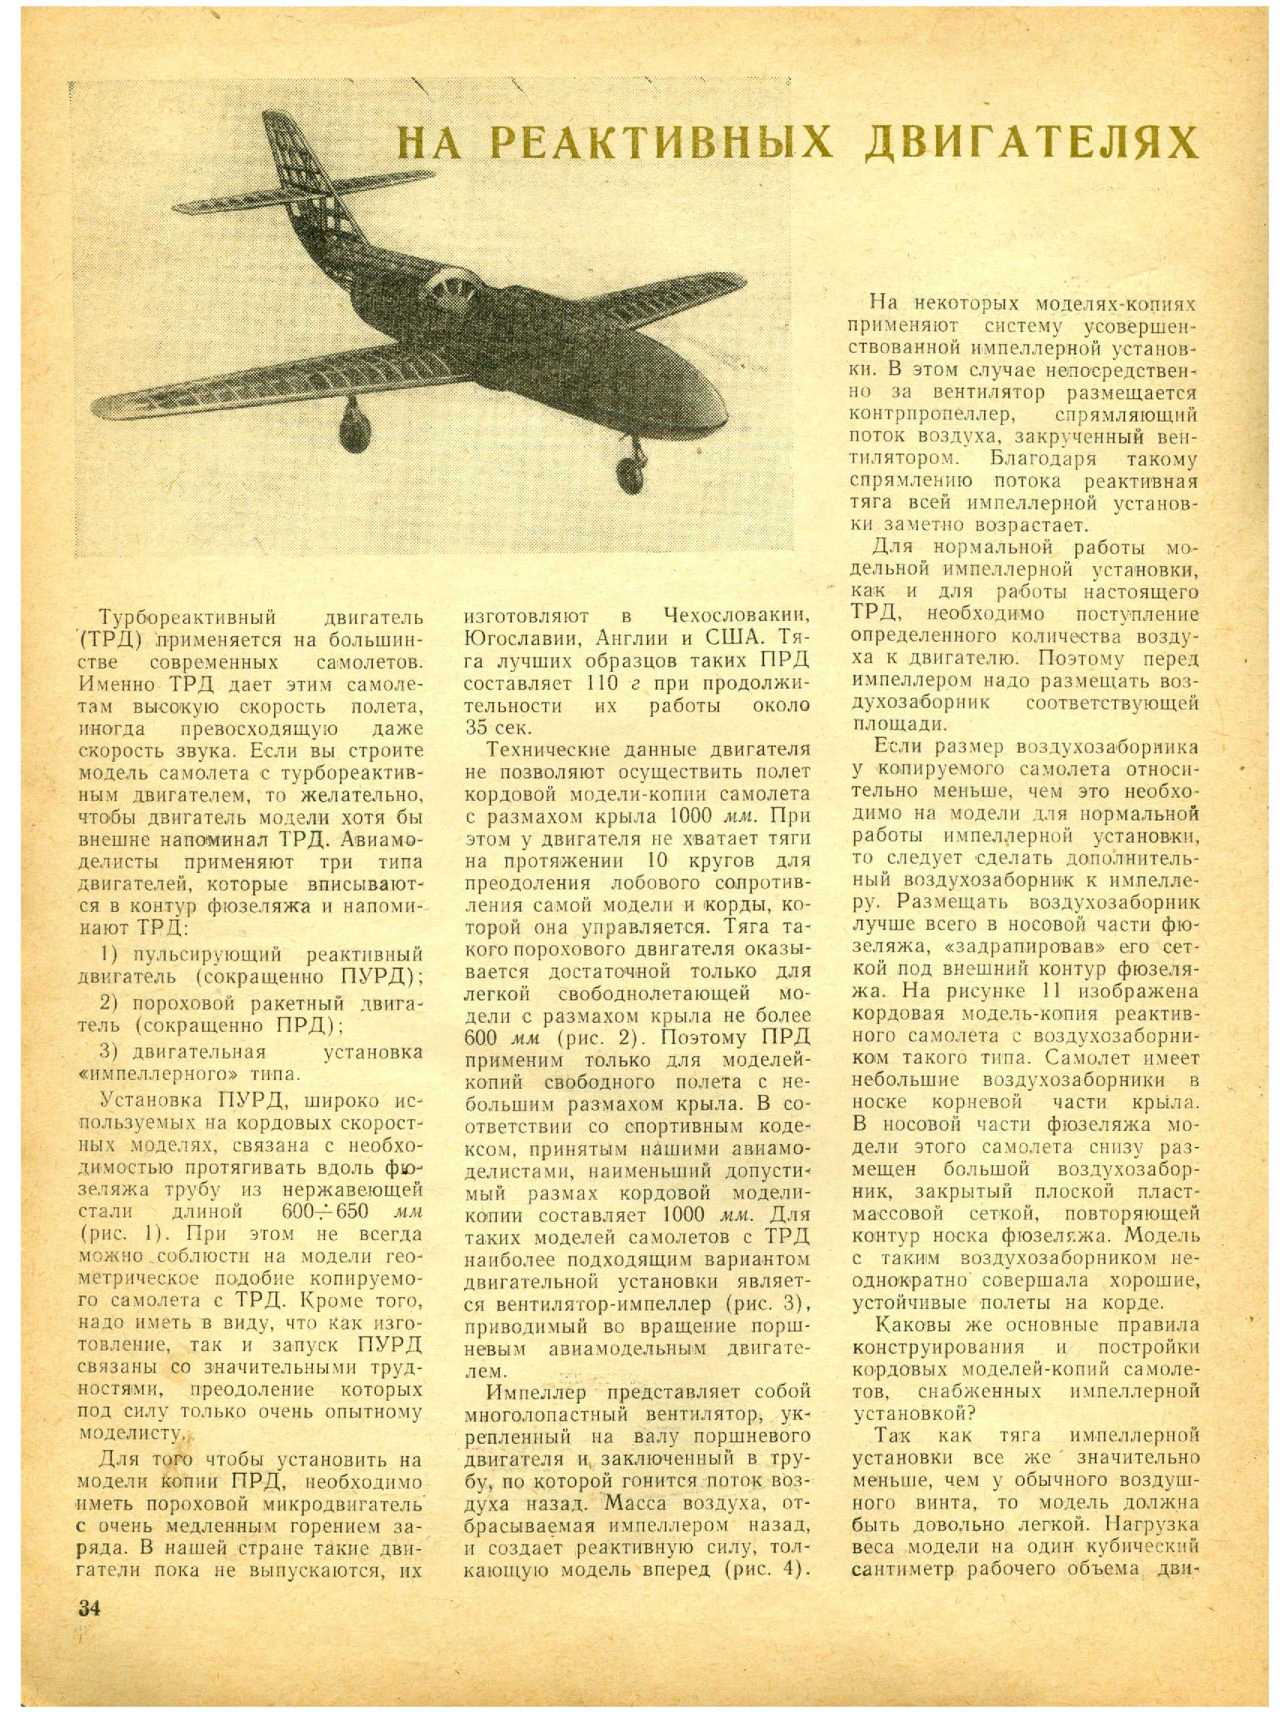 ЮМК 11, 1965, 34 c.